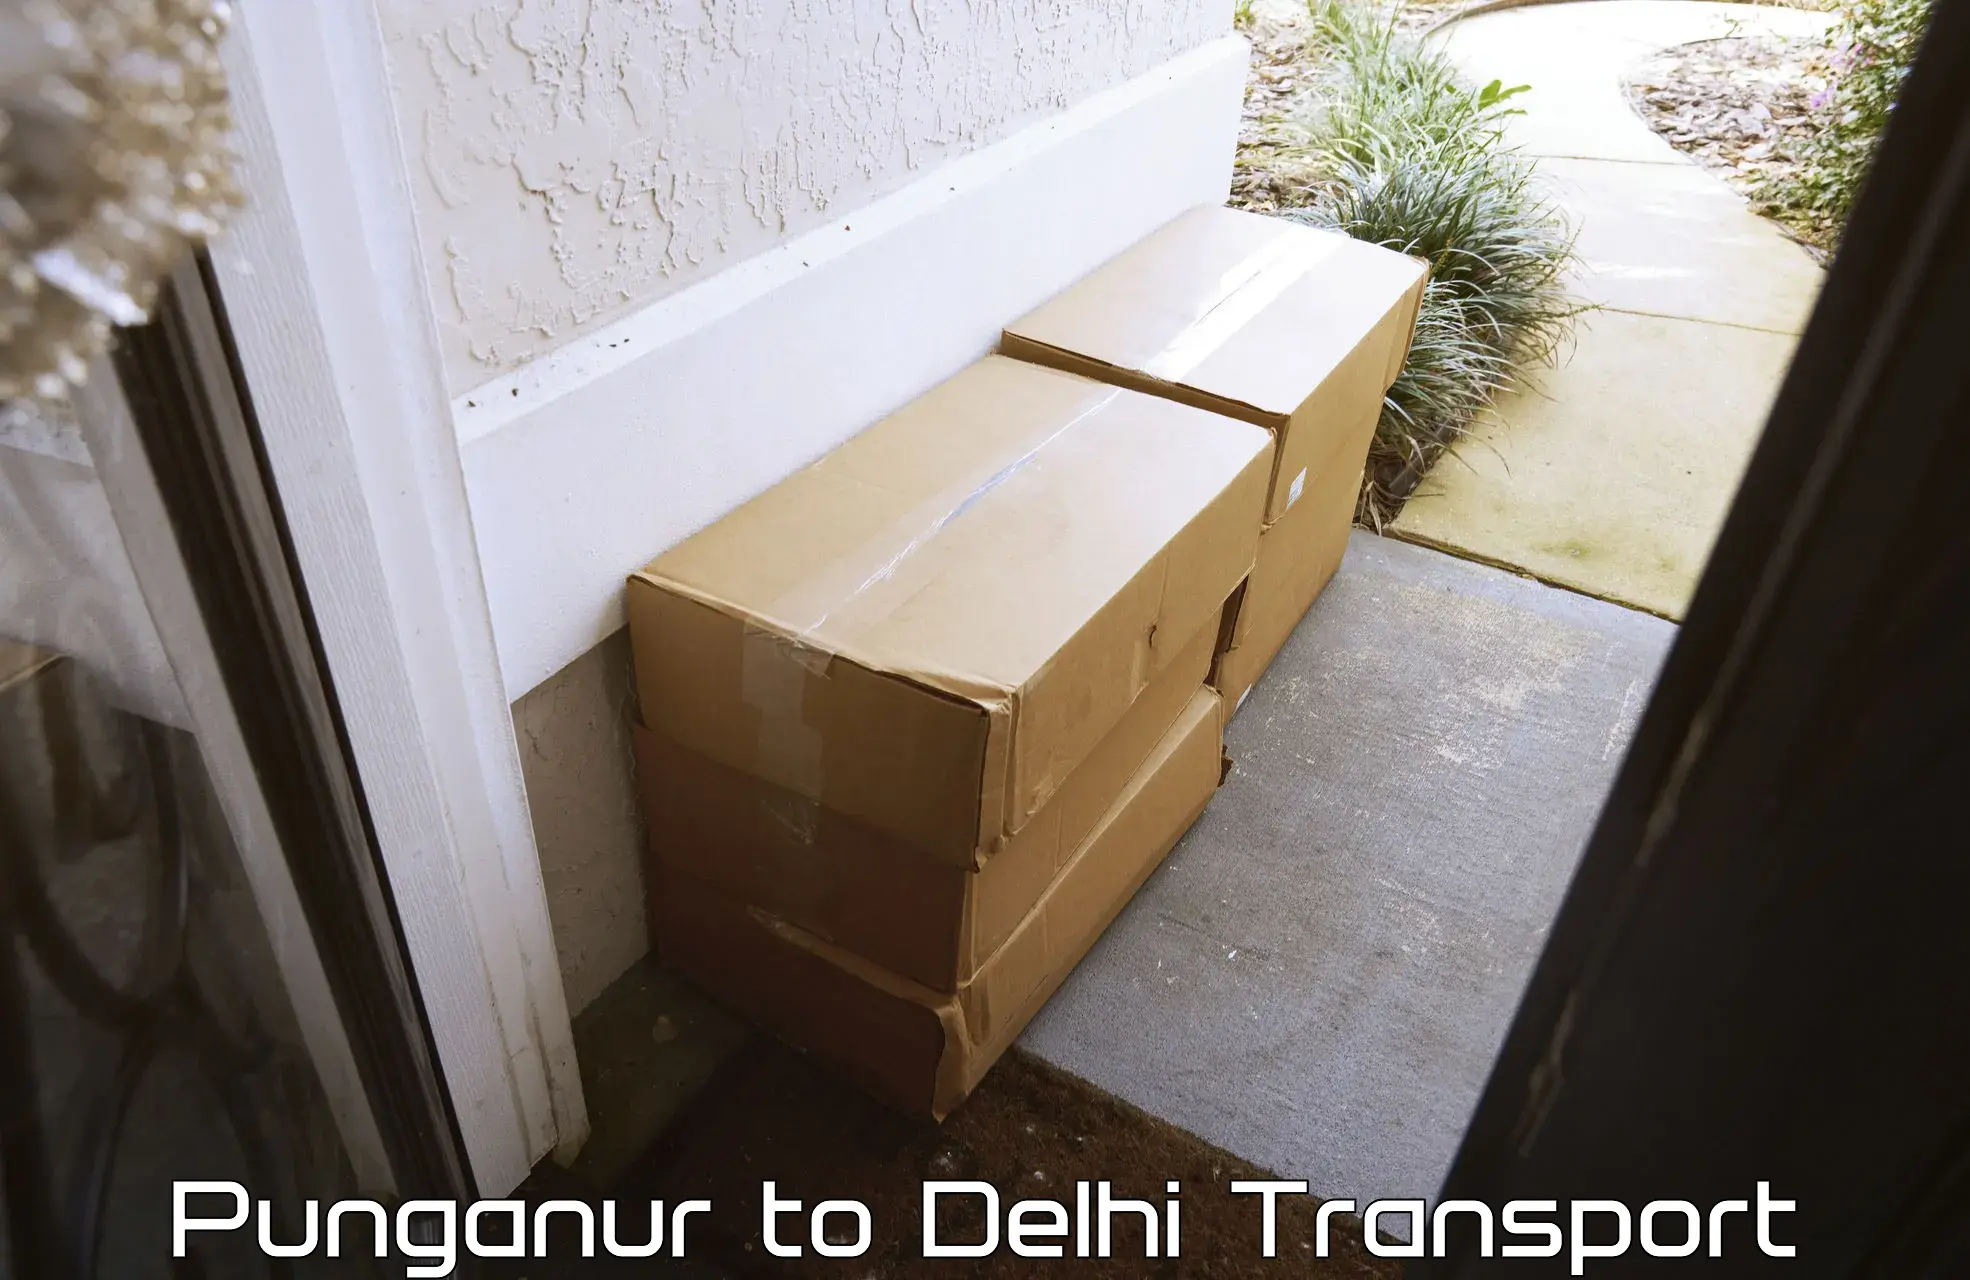 Shipping partner Punganur to Delhi